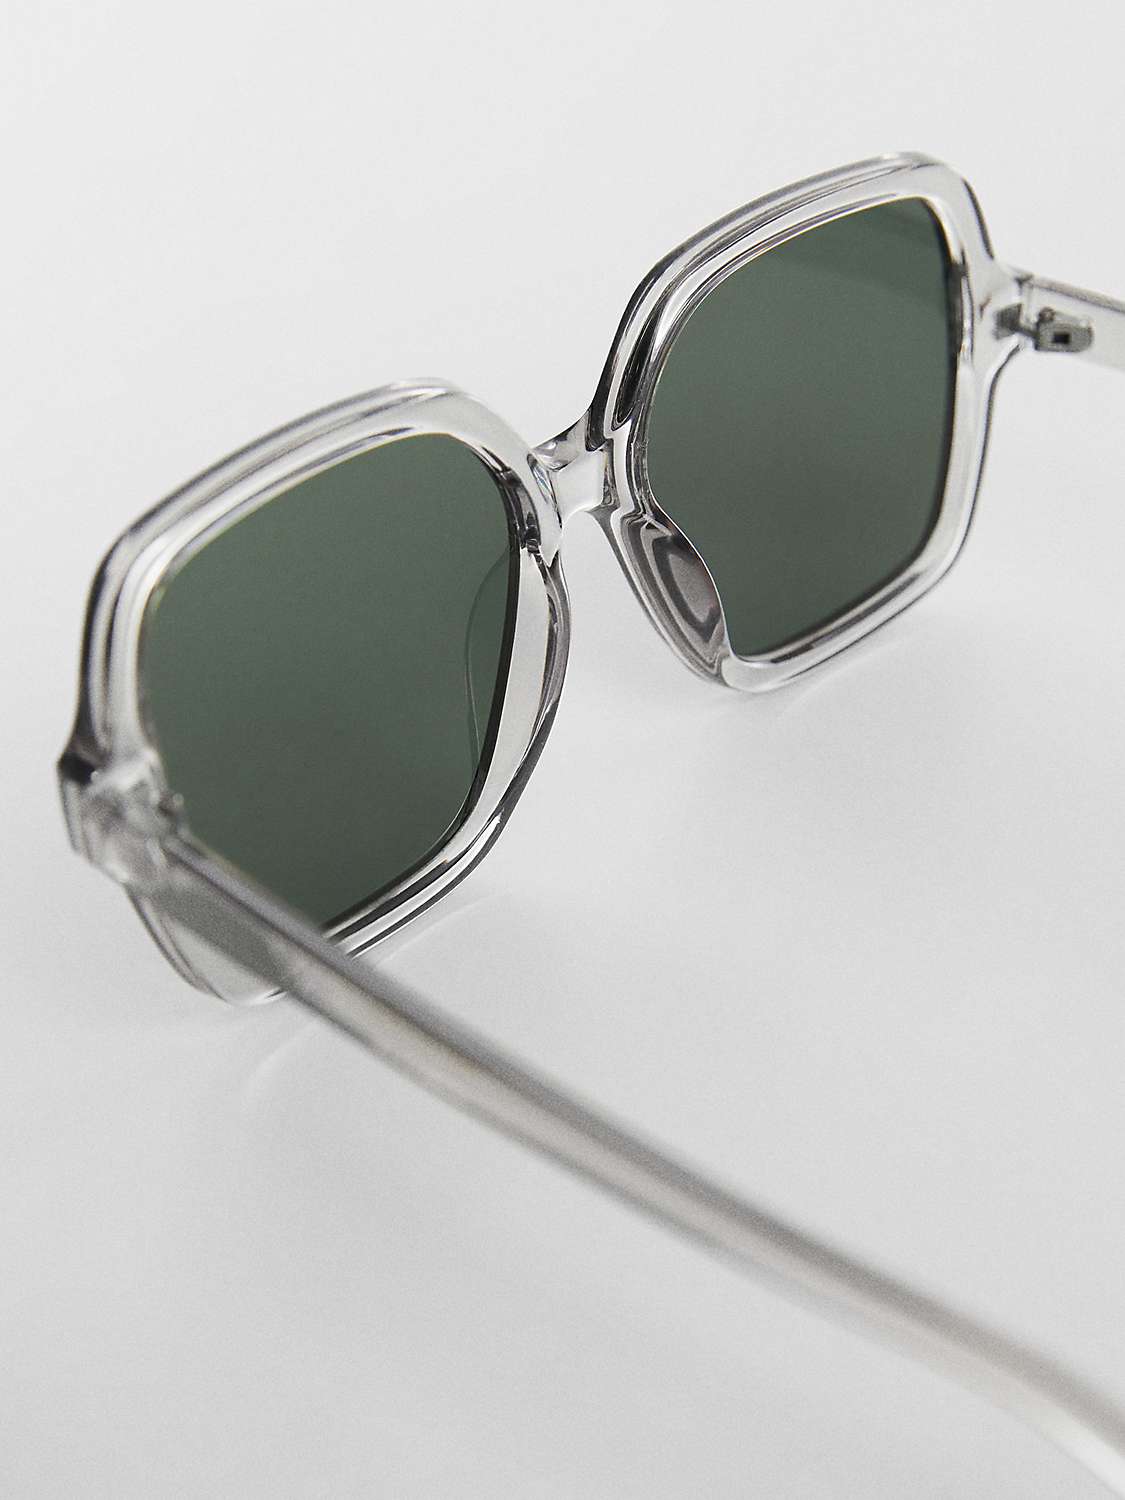 Buy Mango Fernanda Square Tortoiseshell Sunglasses Online at johnlewis.com